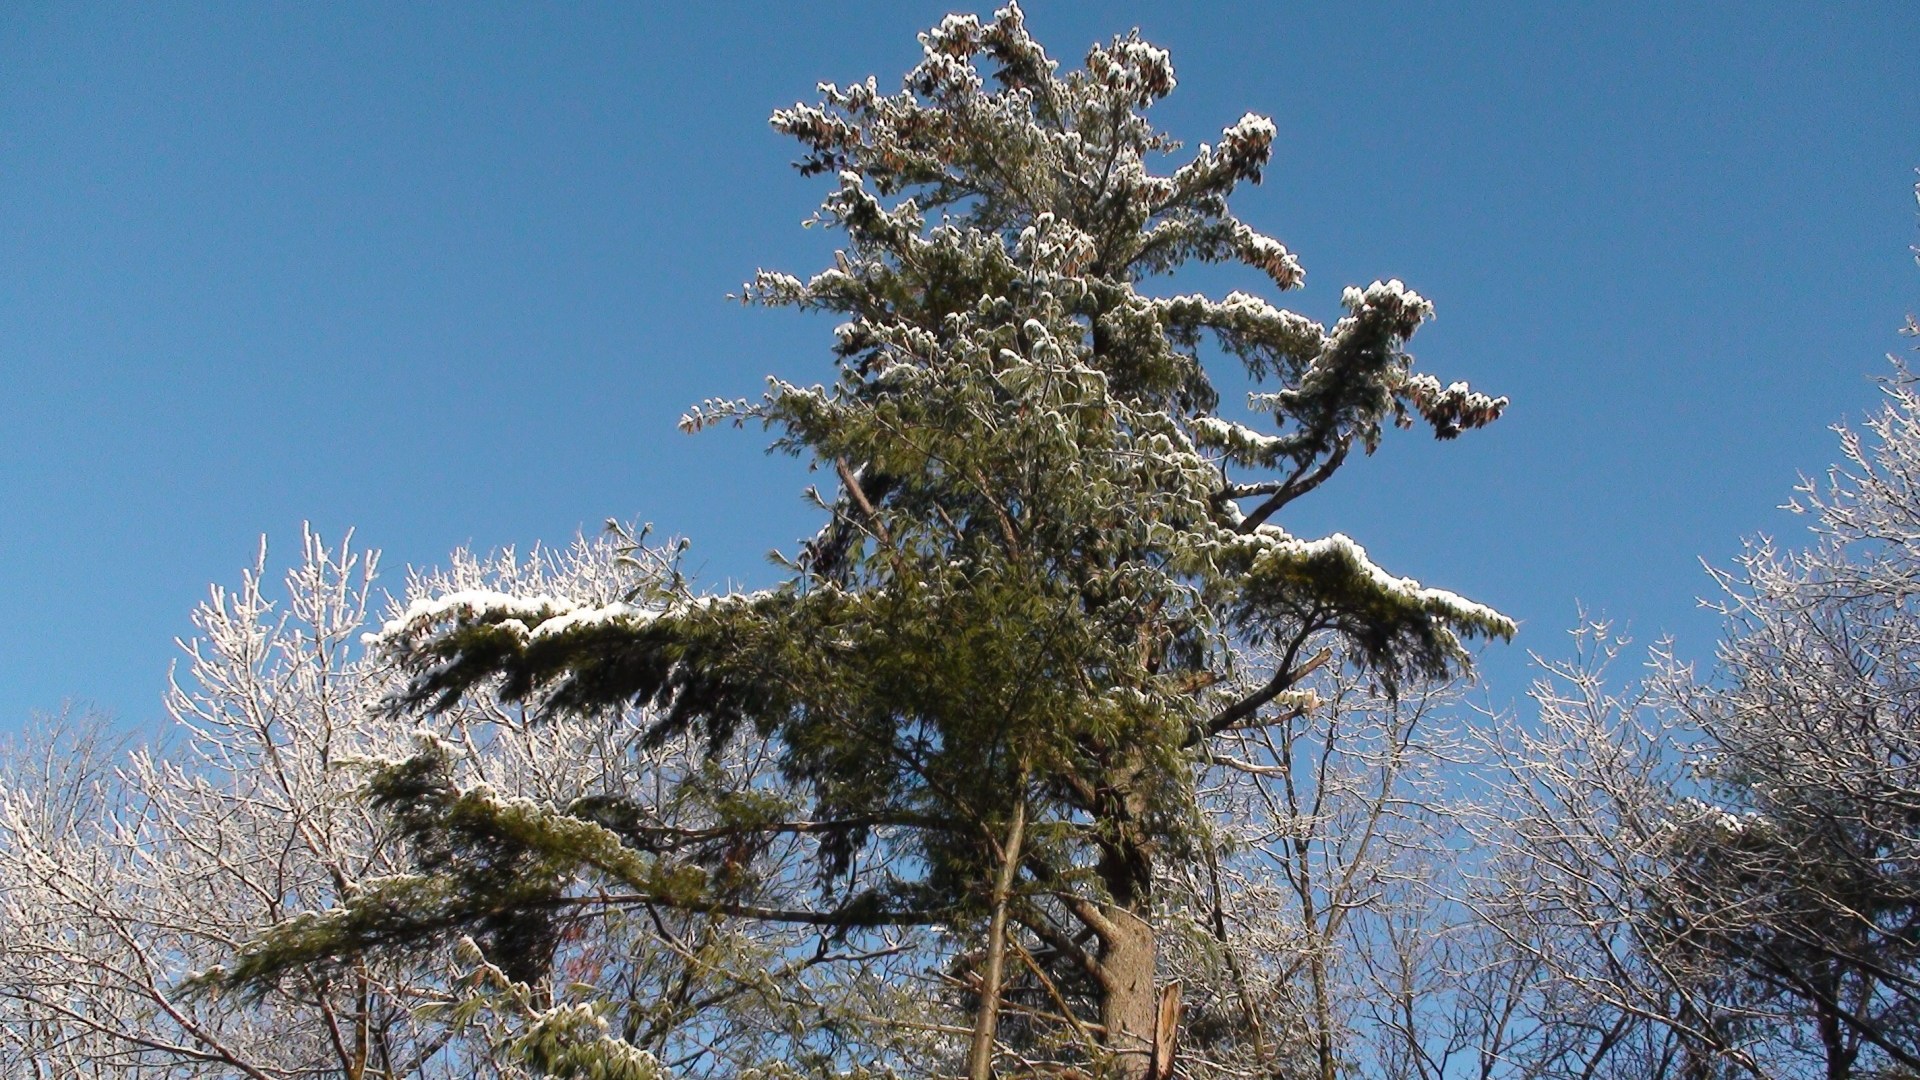 Misrable tree damaged by last ice rain